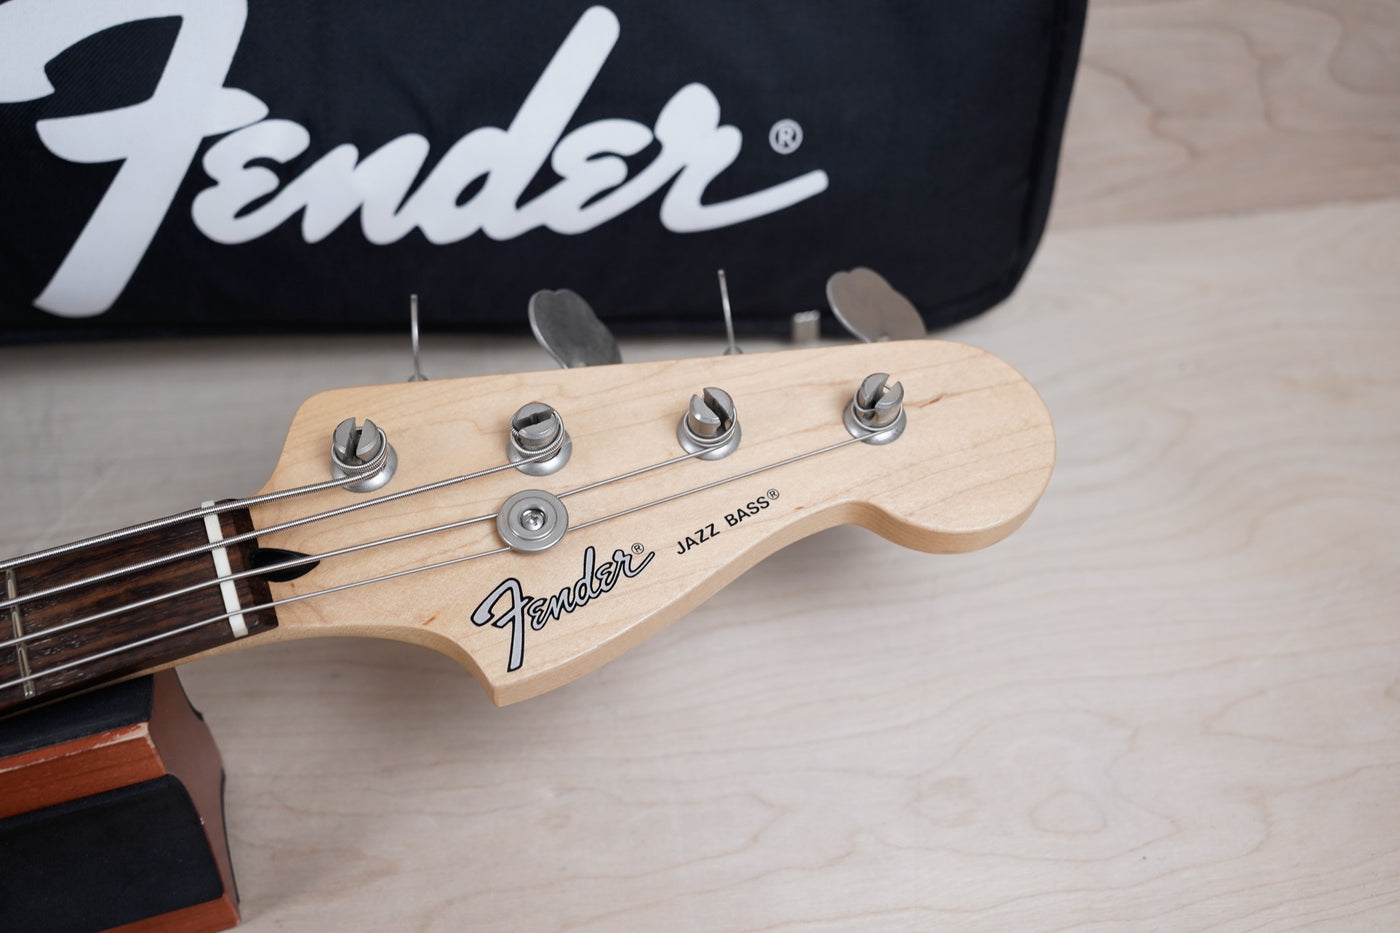 Fender JB Standard Jazz Bass MIJ 2015 Candy Apple Red w/ Bag